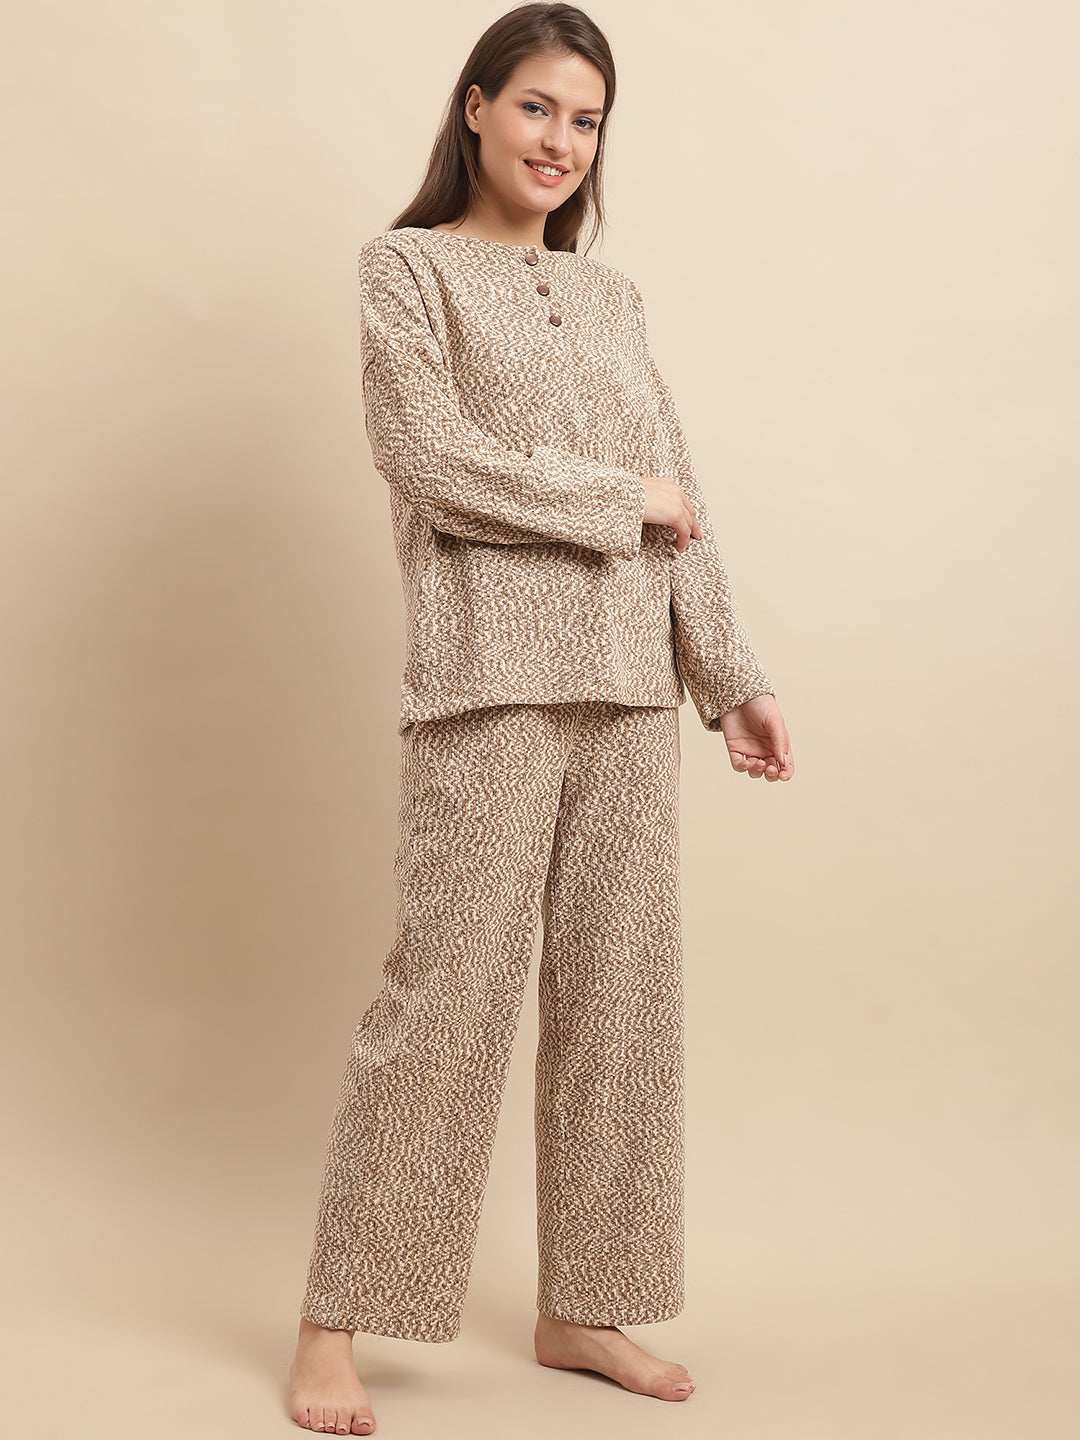 Soft - Winterwear - MJKAW23524A